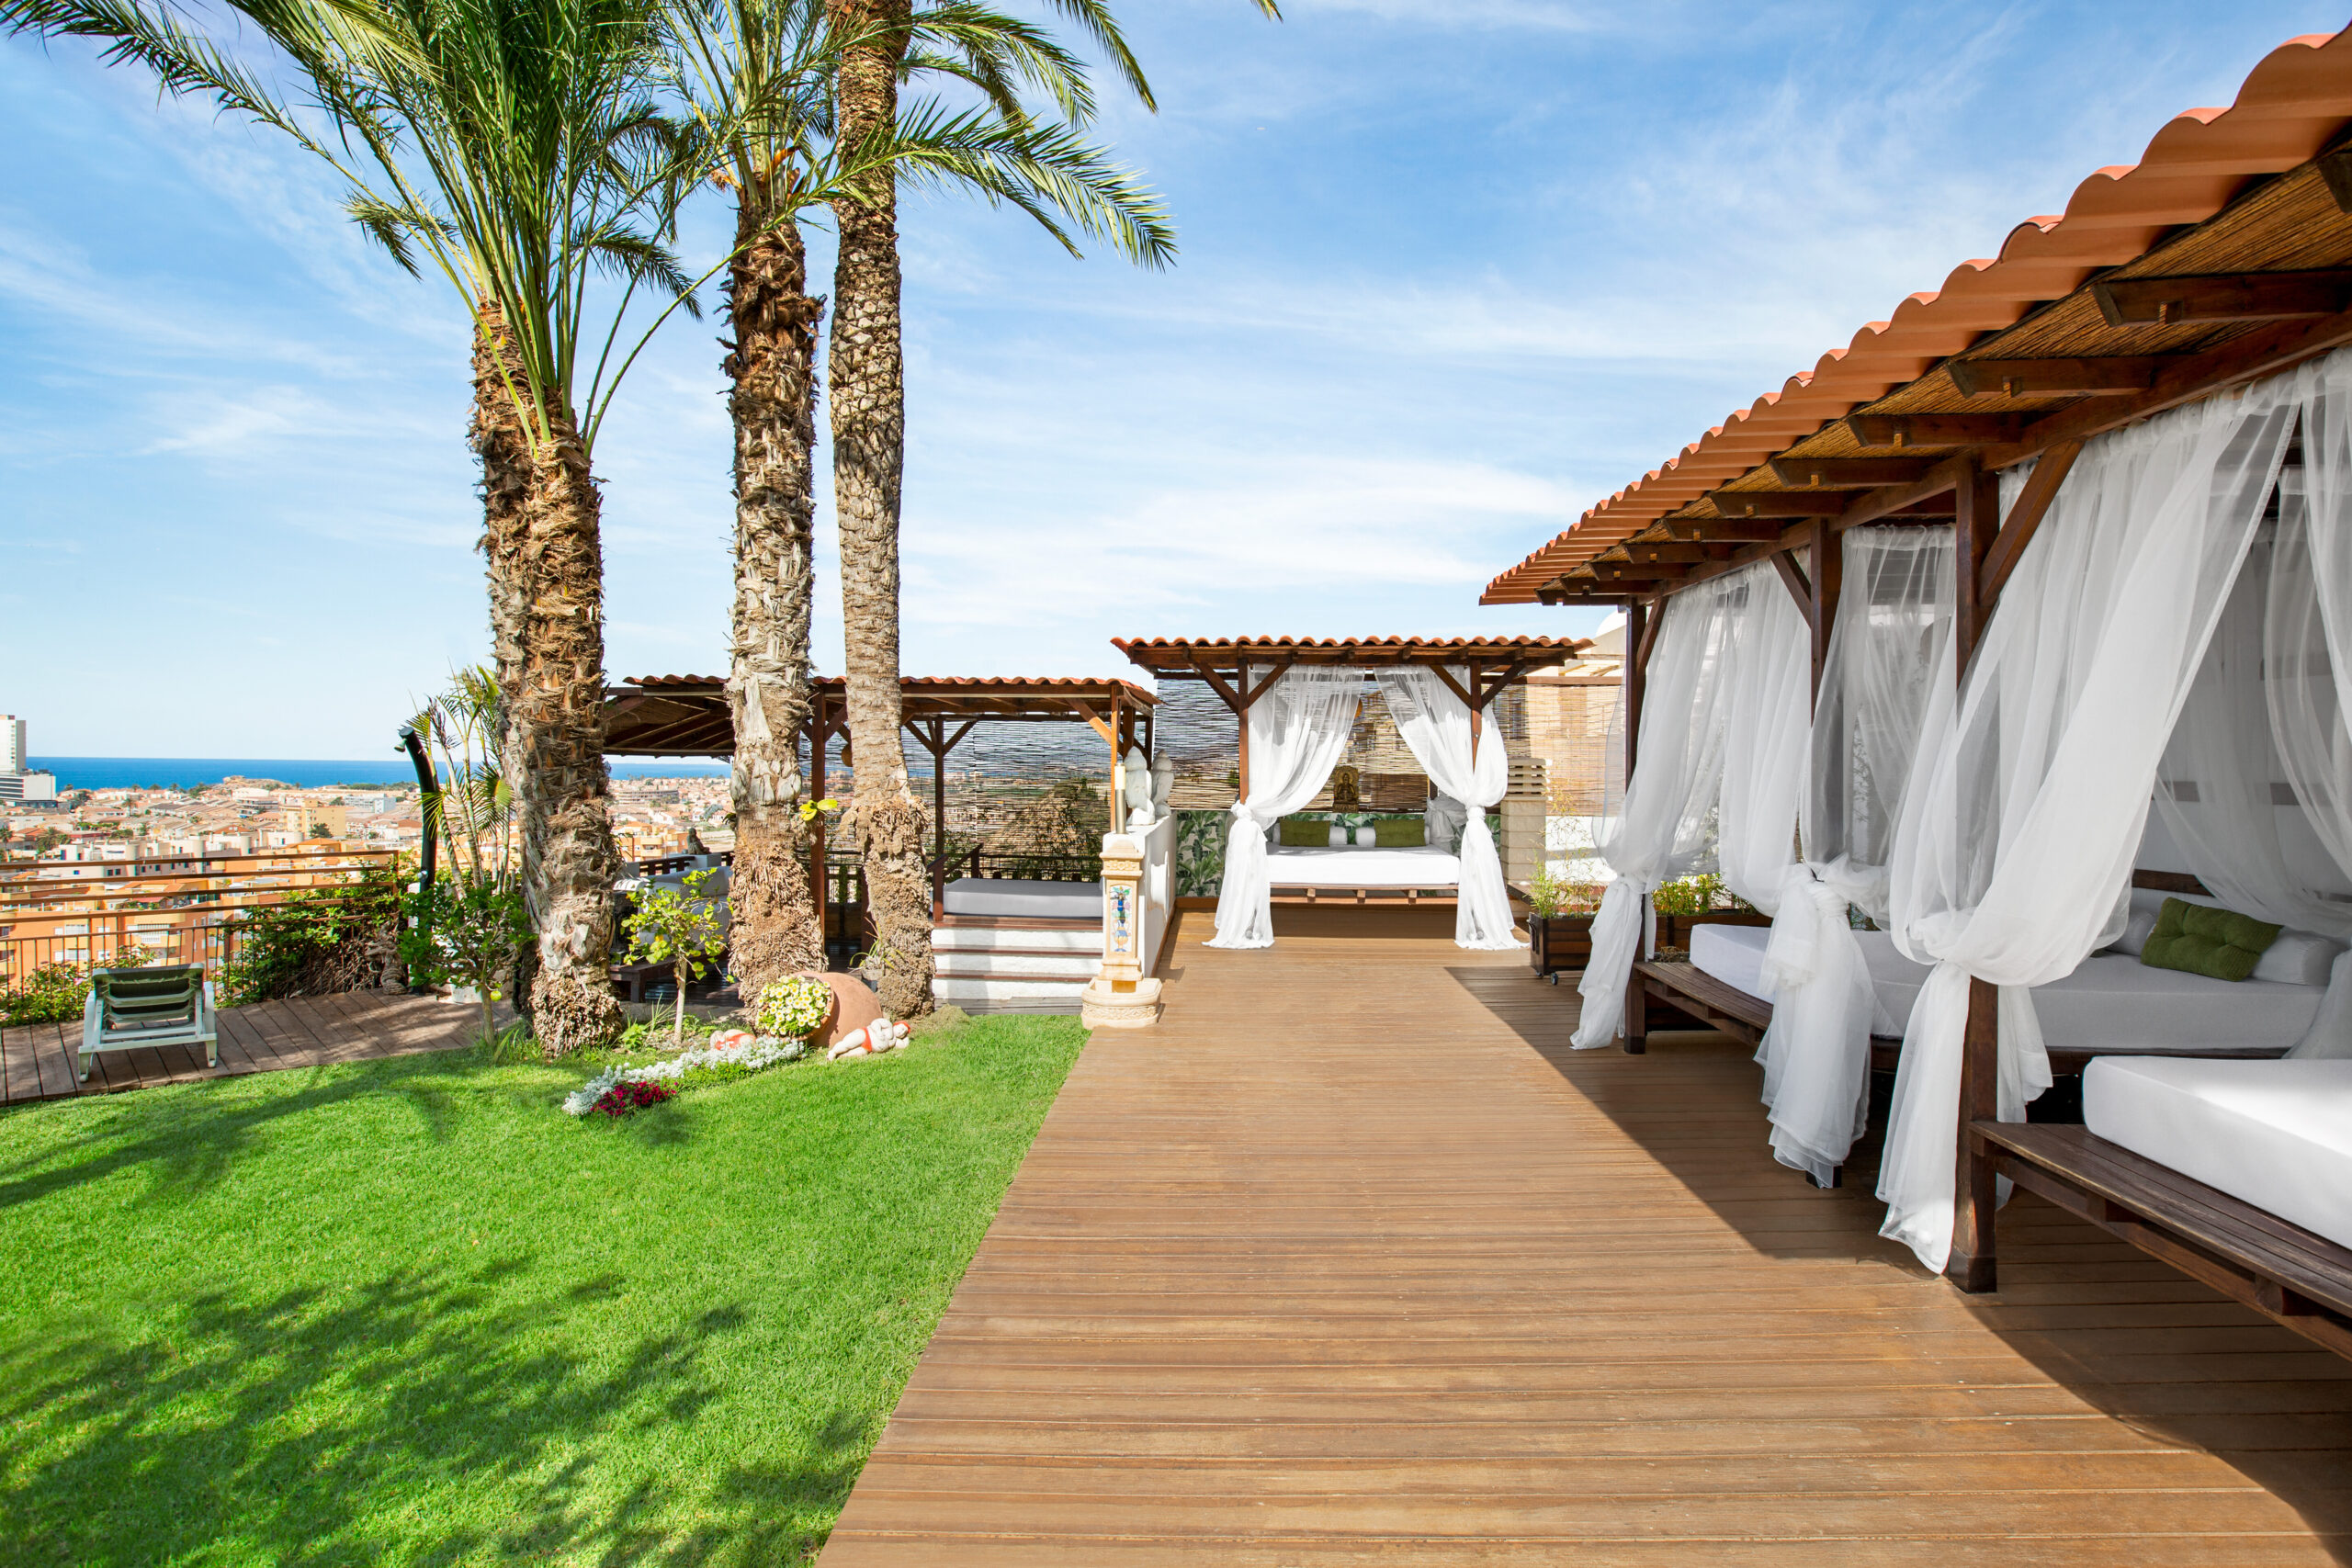 Ramada Resort by Wyndham Puerto de Mazarron - Pool - 1508137